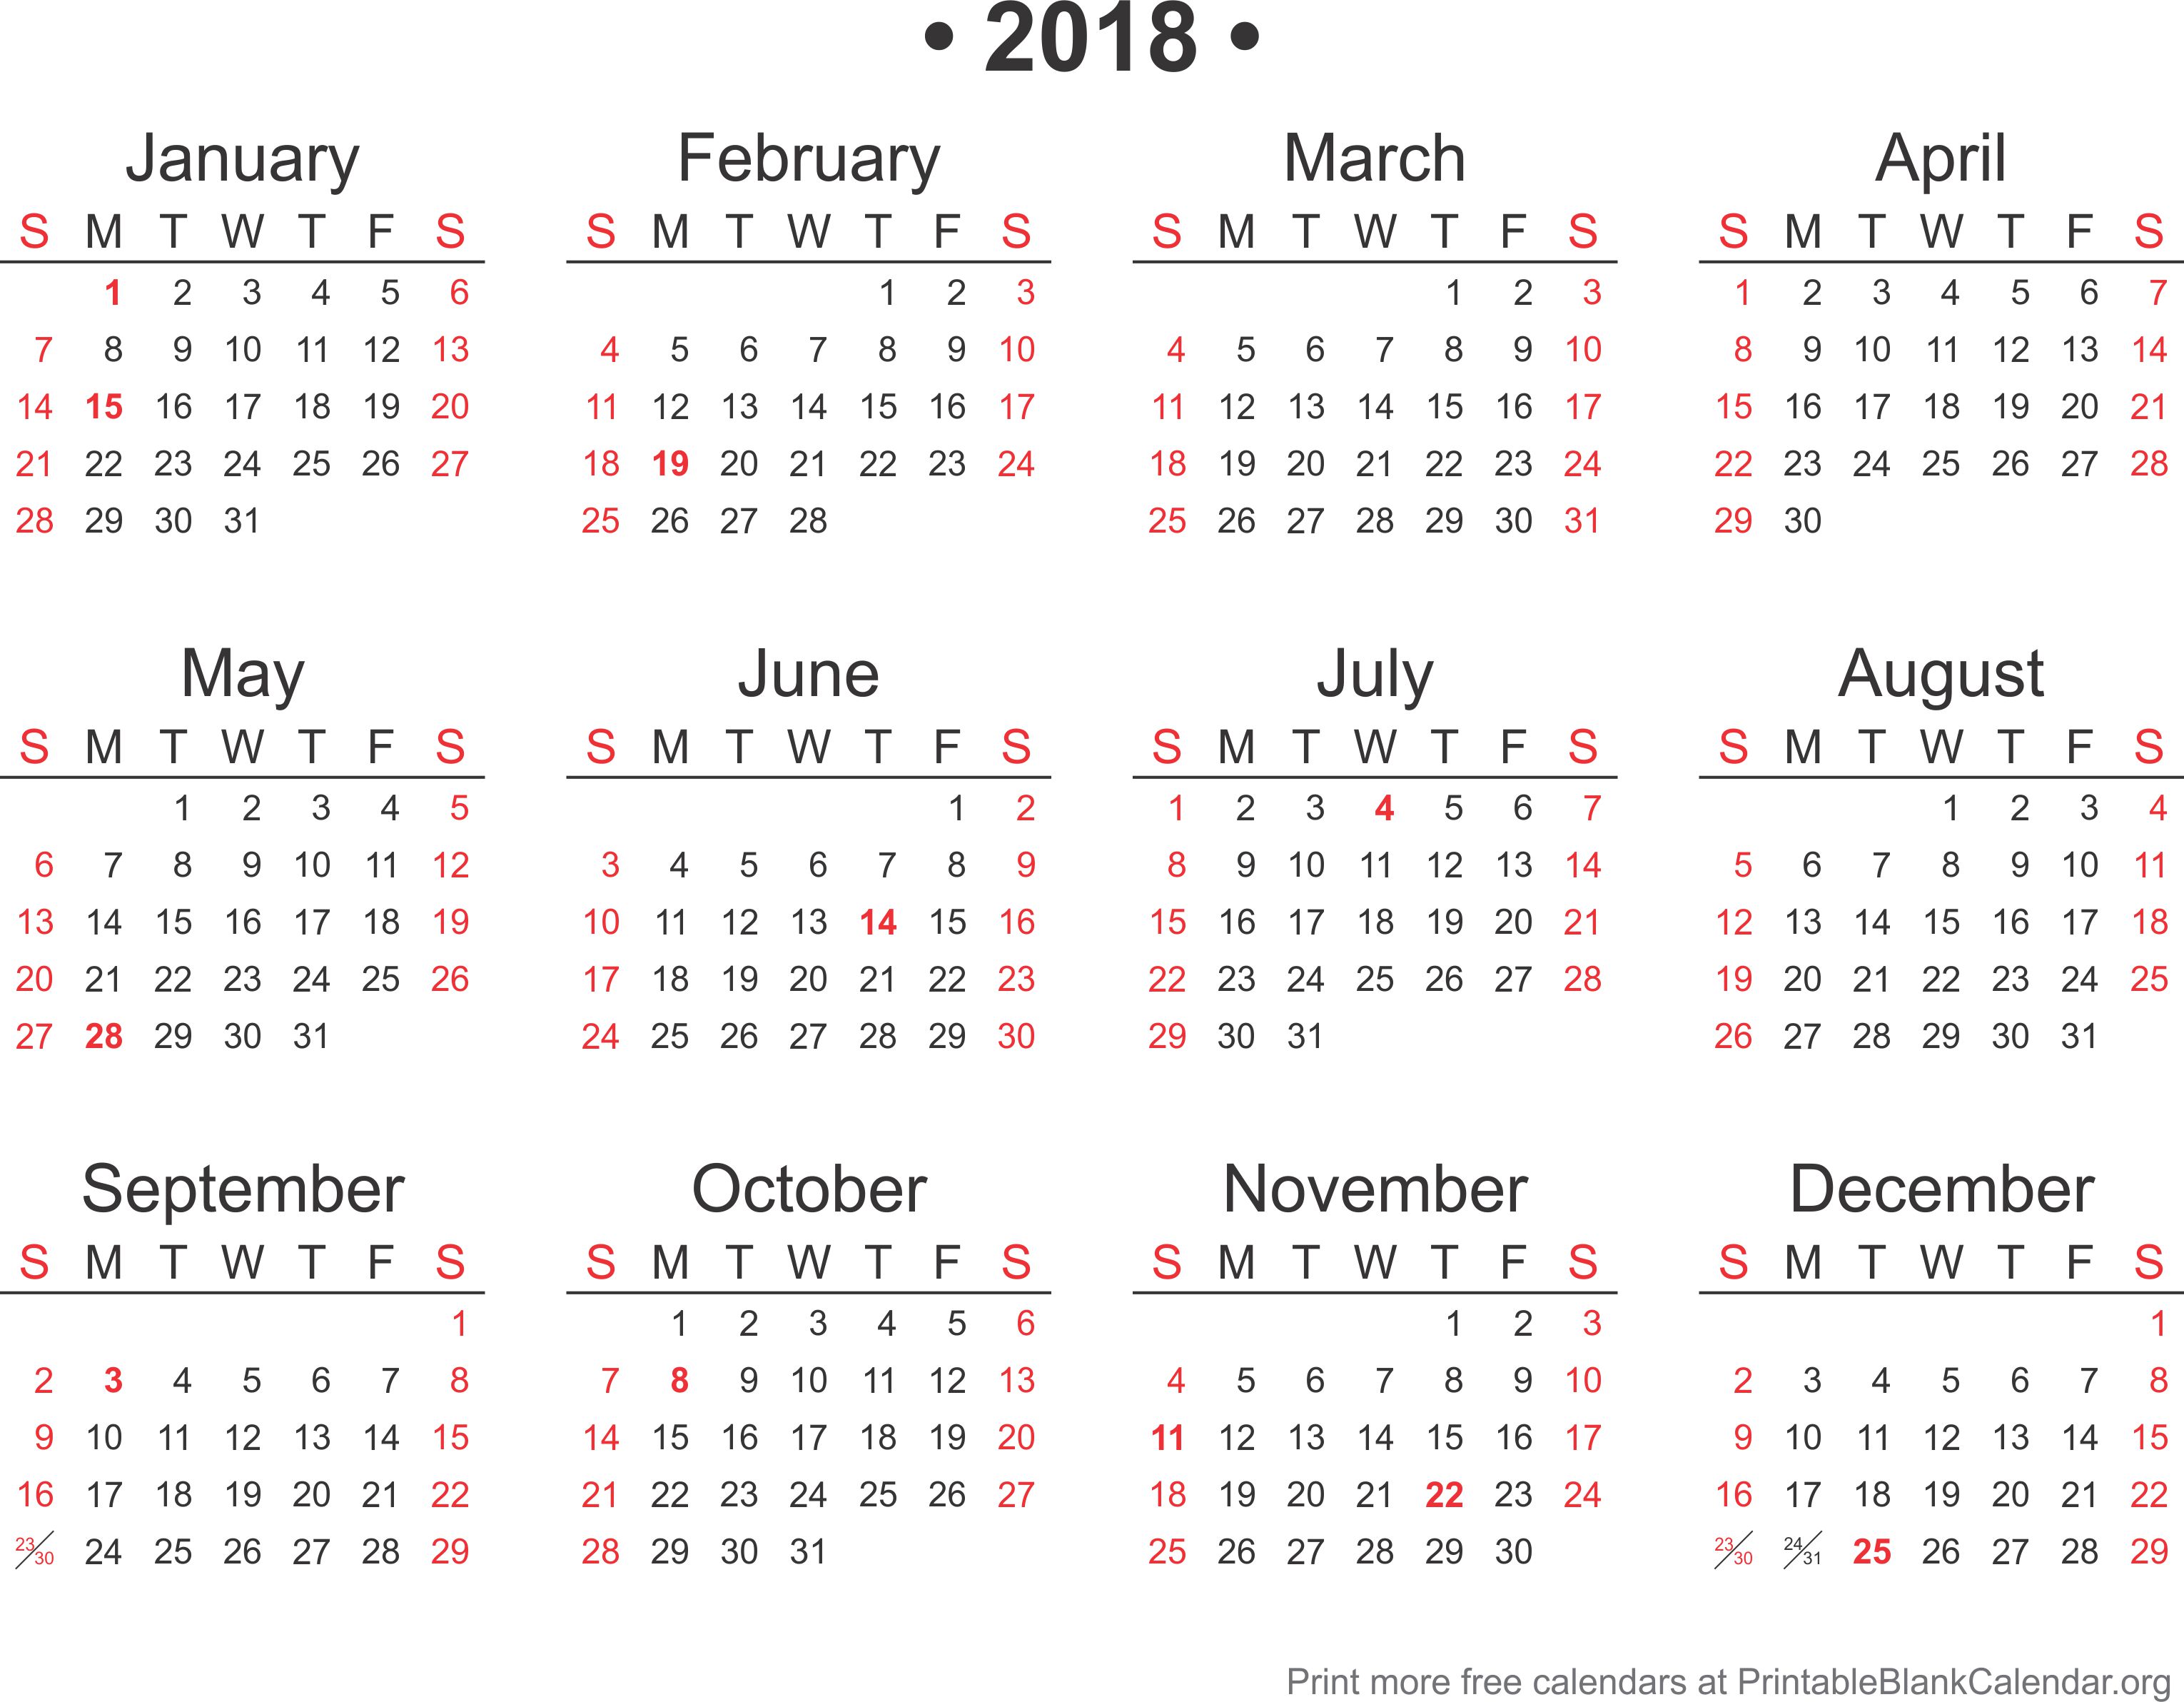 2018 calendar - Printable Blank Calendar.org